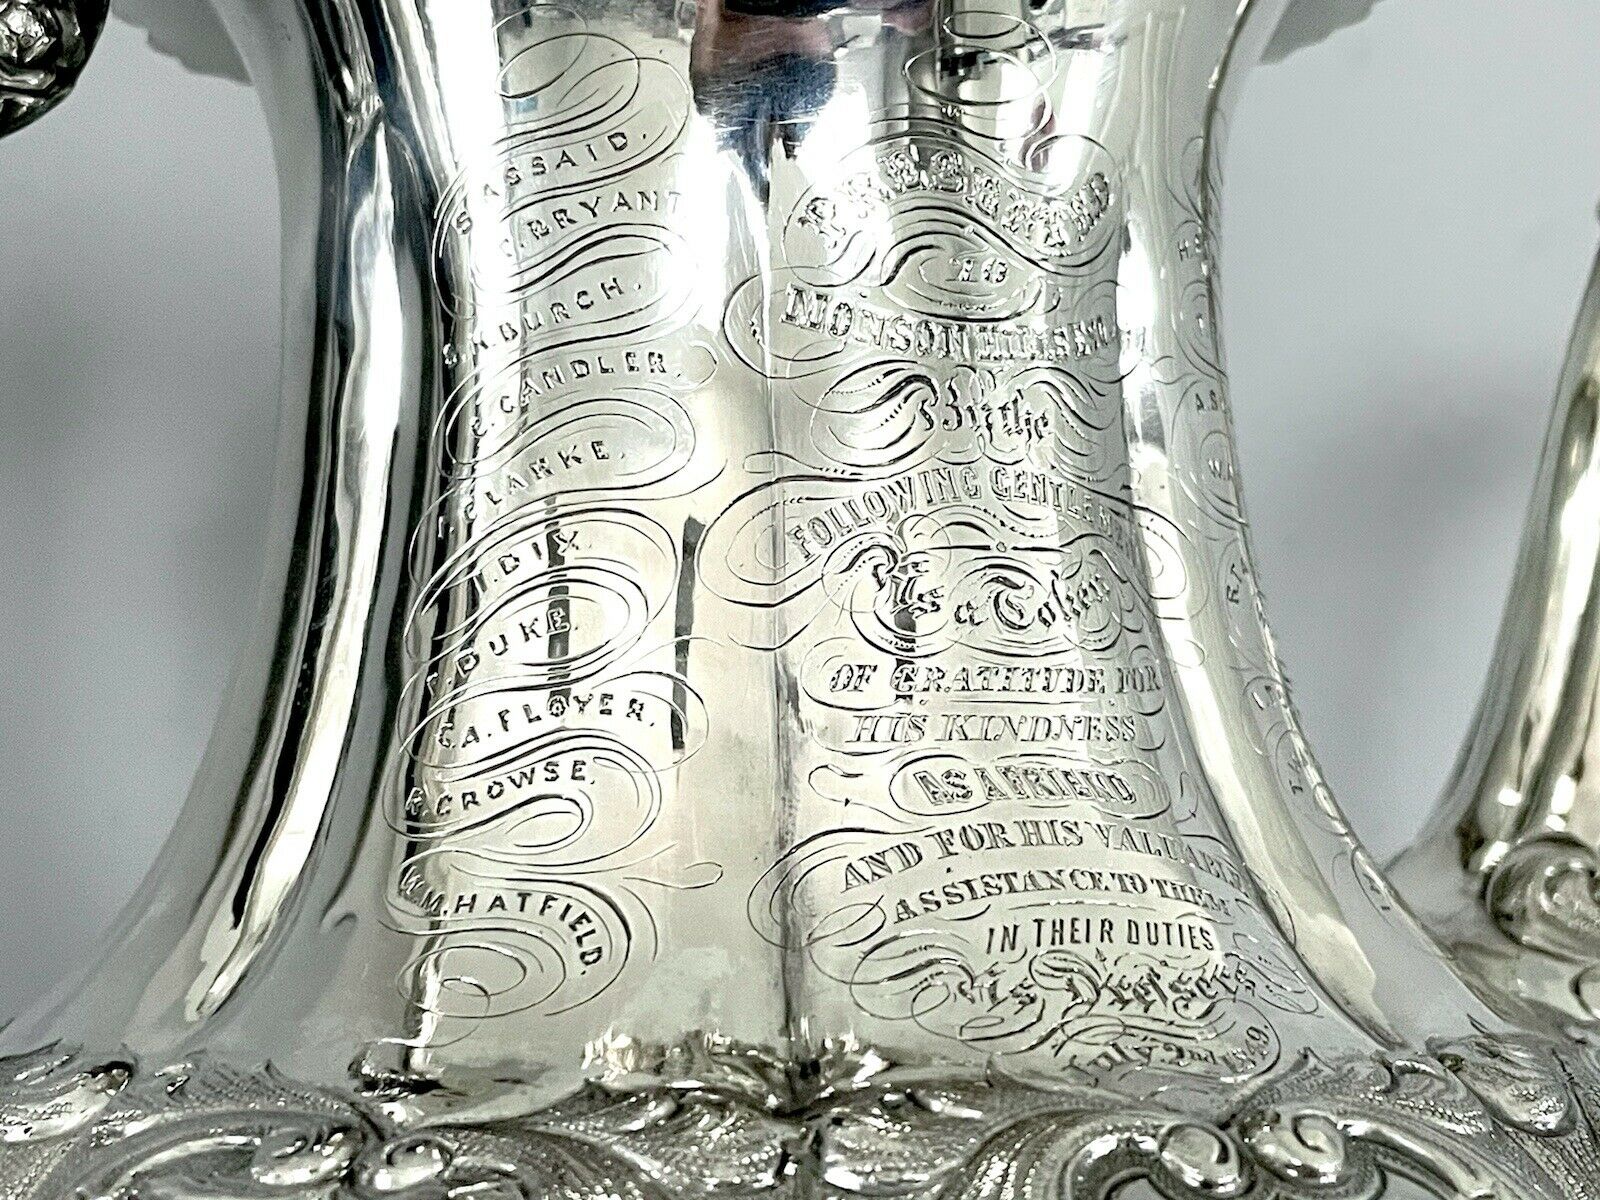 Silver Ornate Teapot By Samuel Haynes & Dudley Carter, London 1847 - 984g